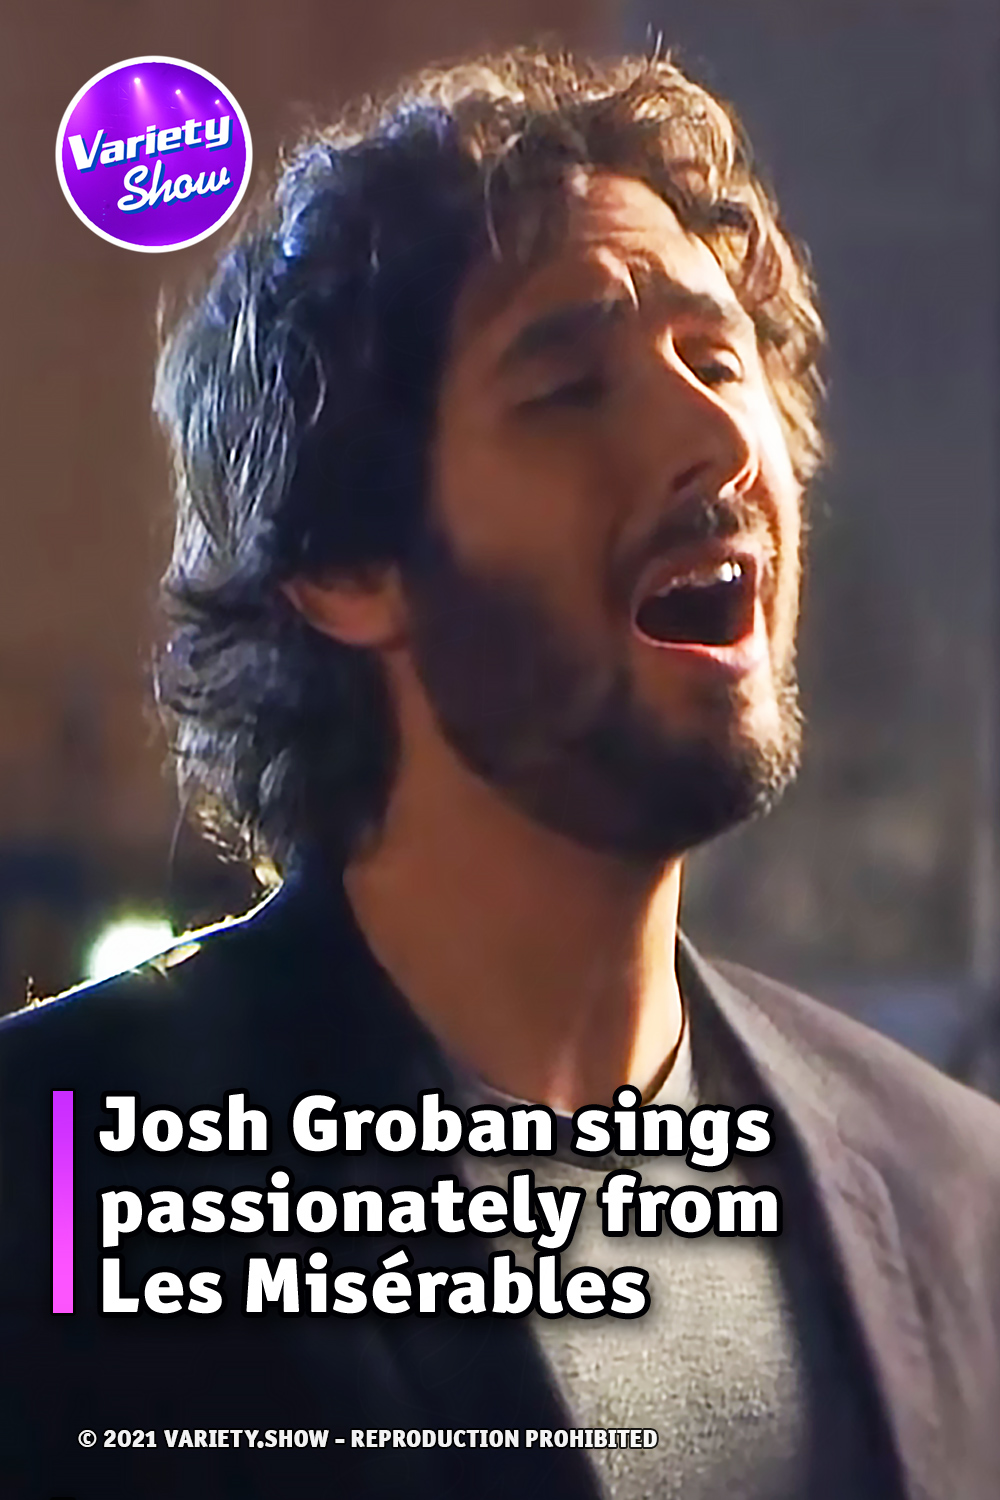 Josh Groban sings passionately from Les Misérables